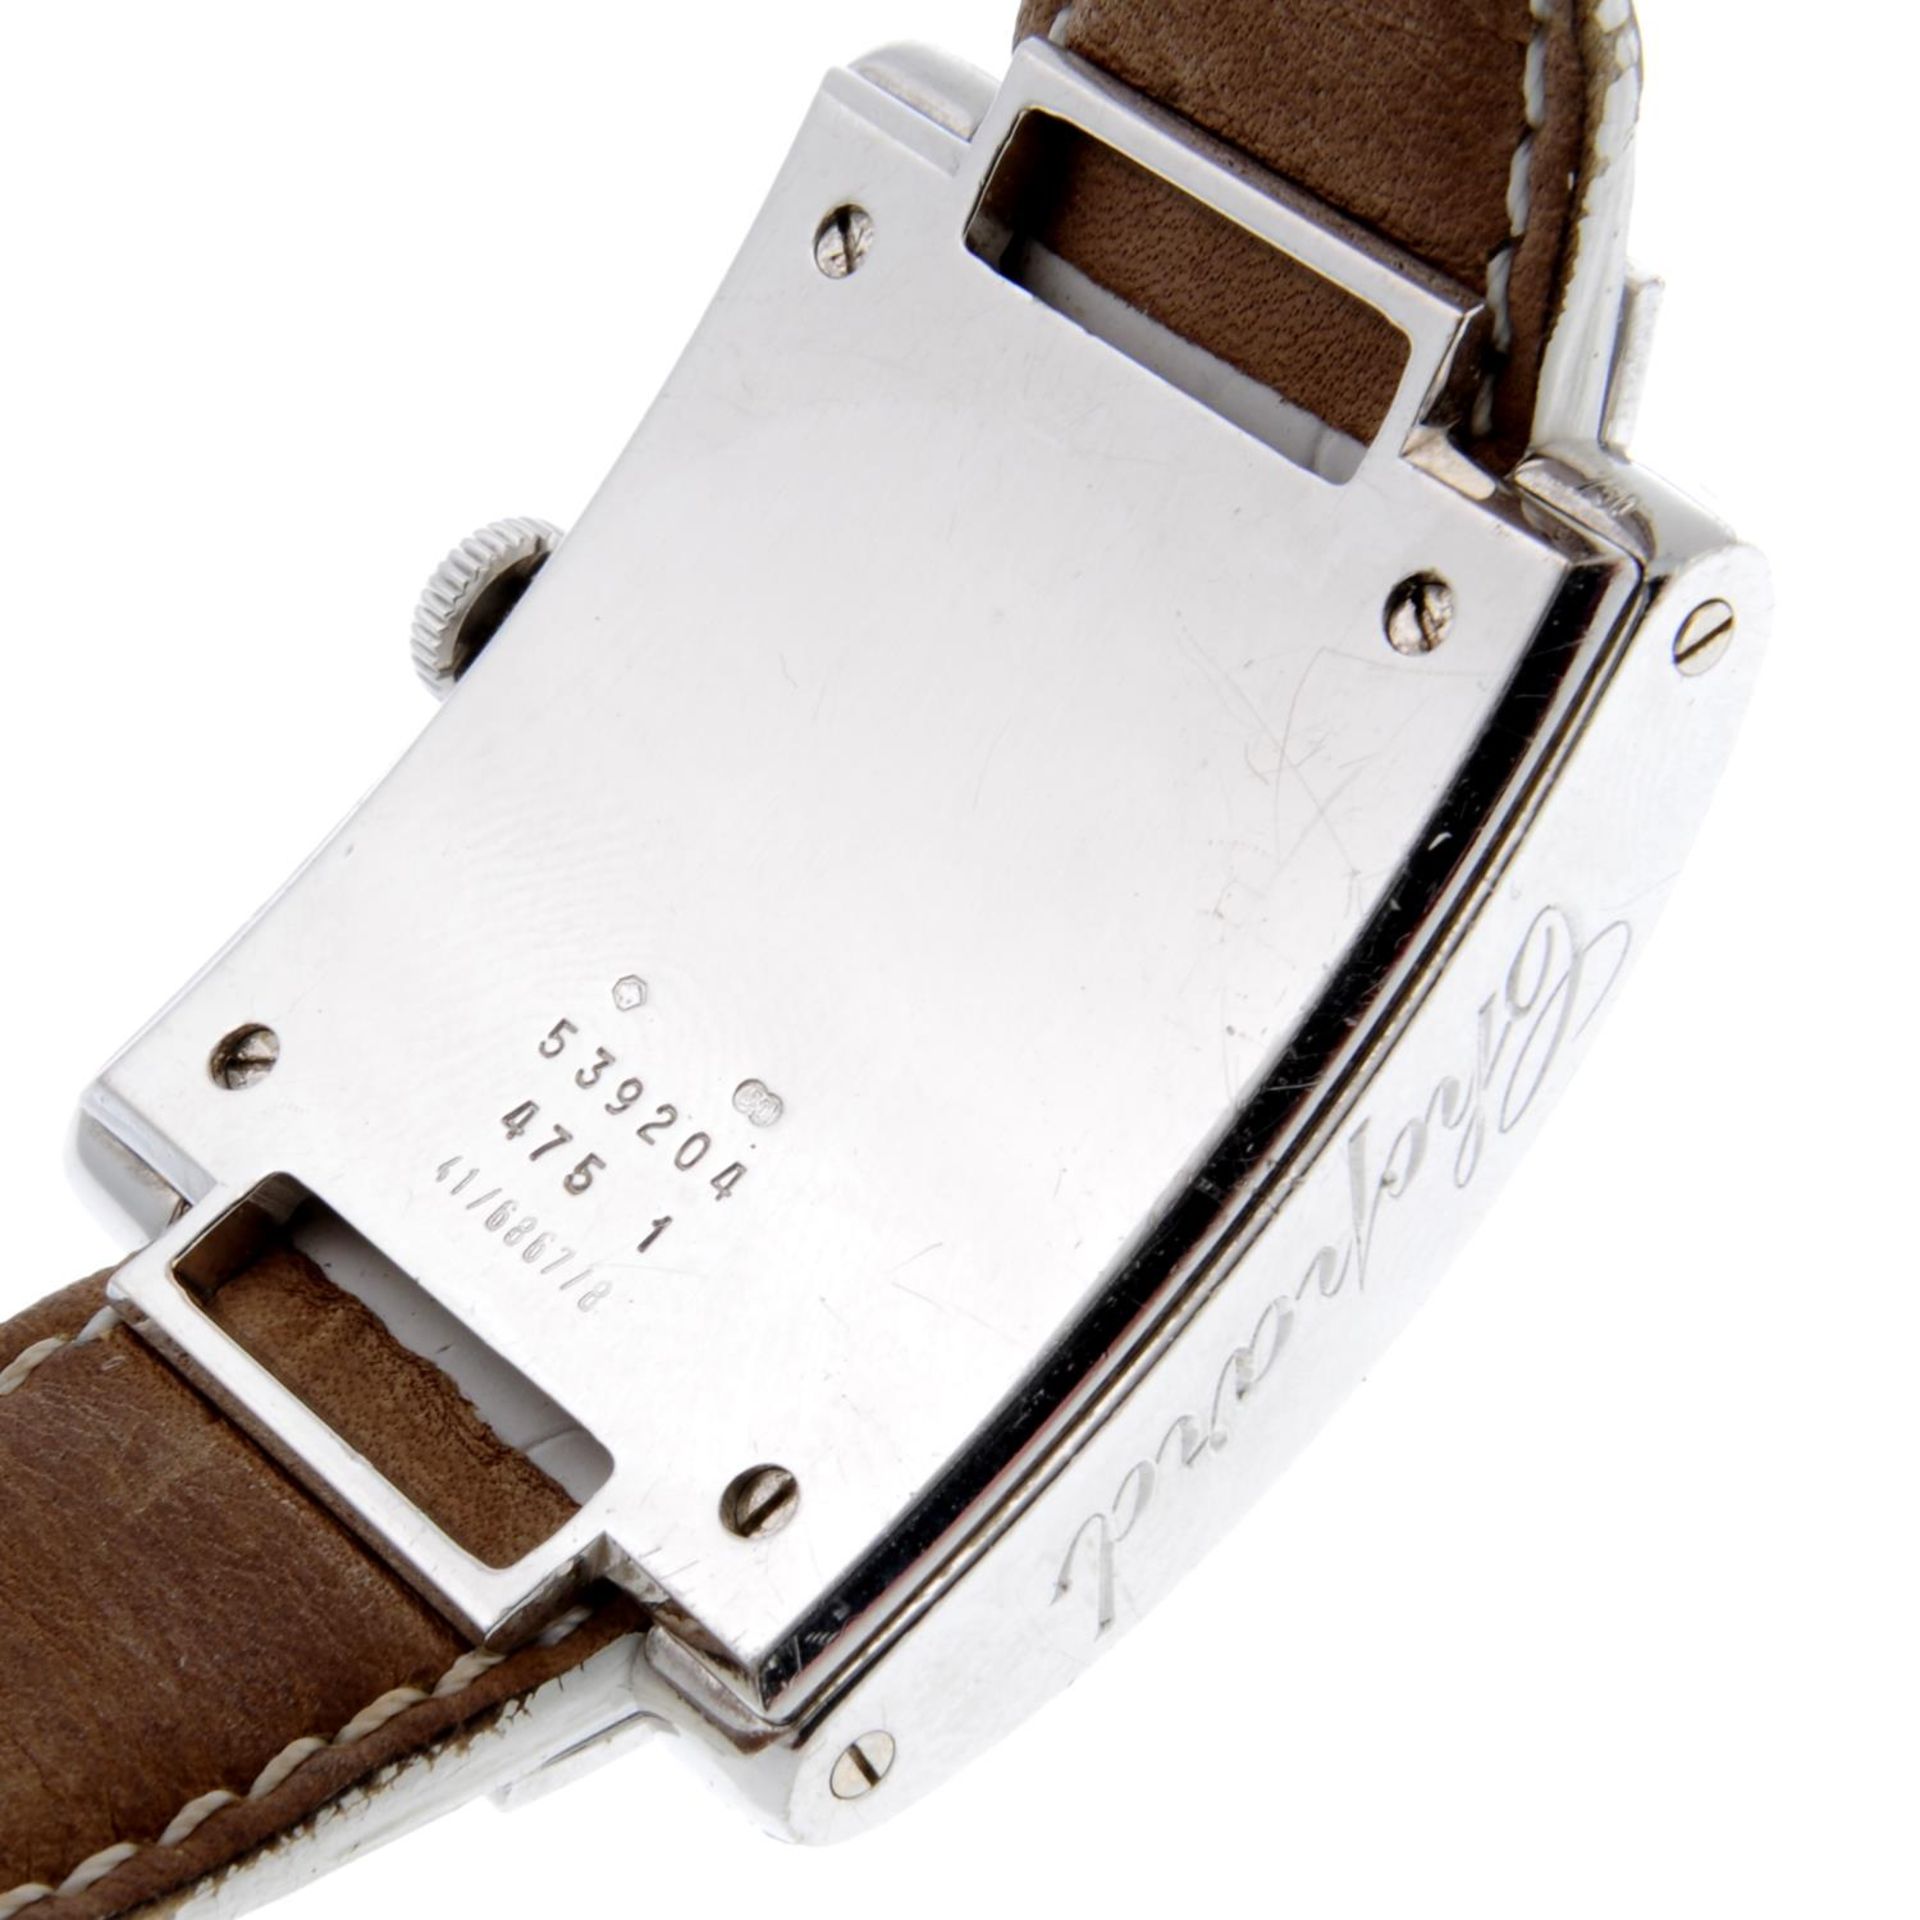 CHOPARD - a La Strada wrist watch. - Image 5 of 5